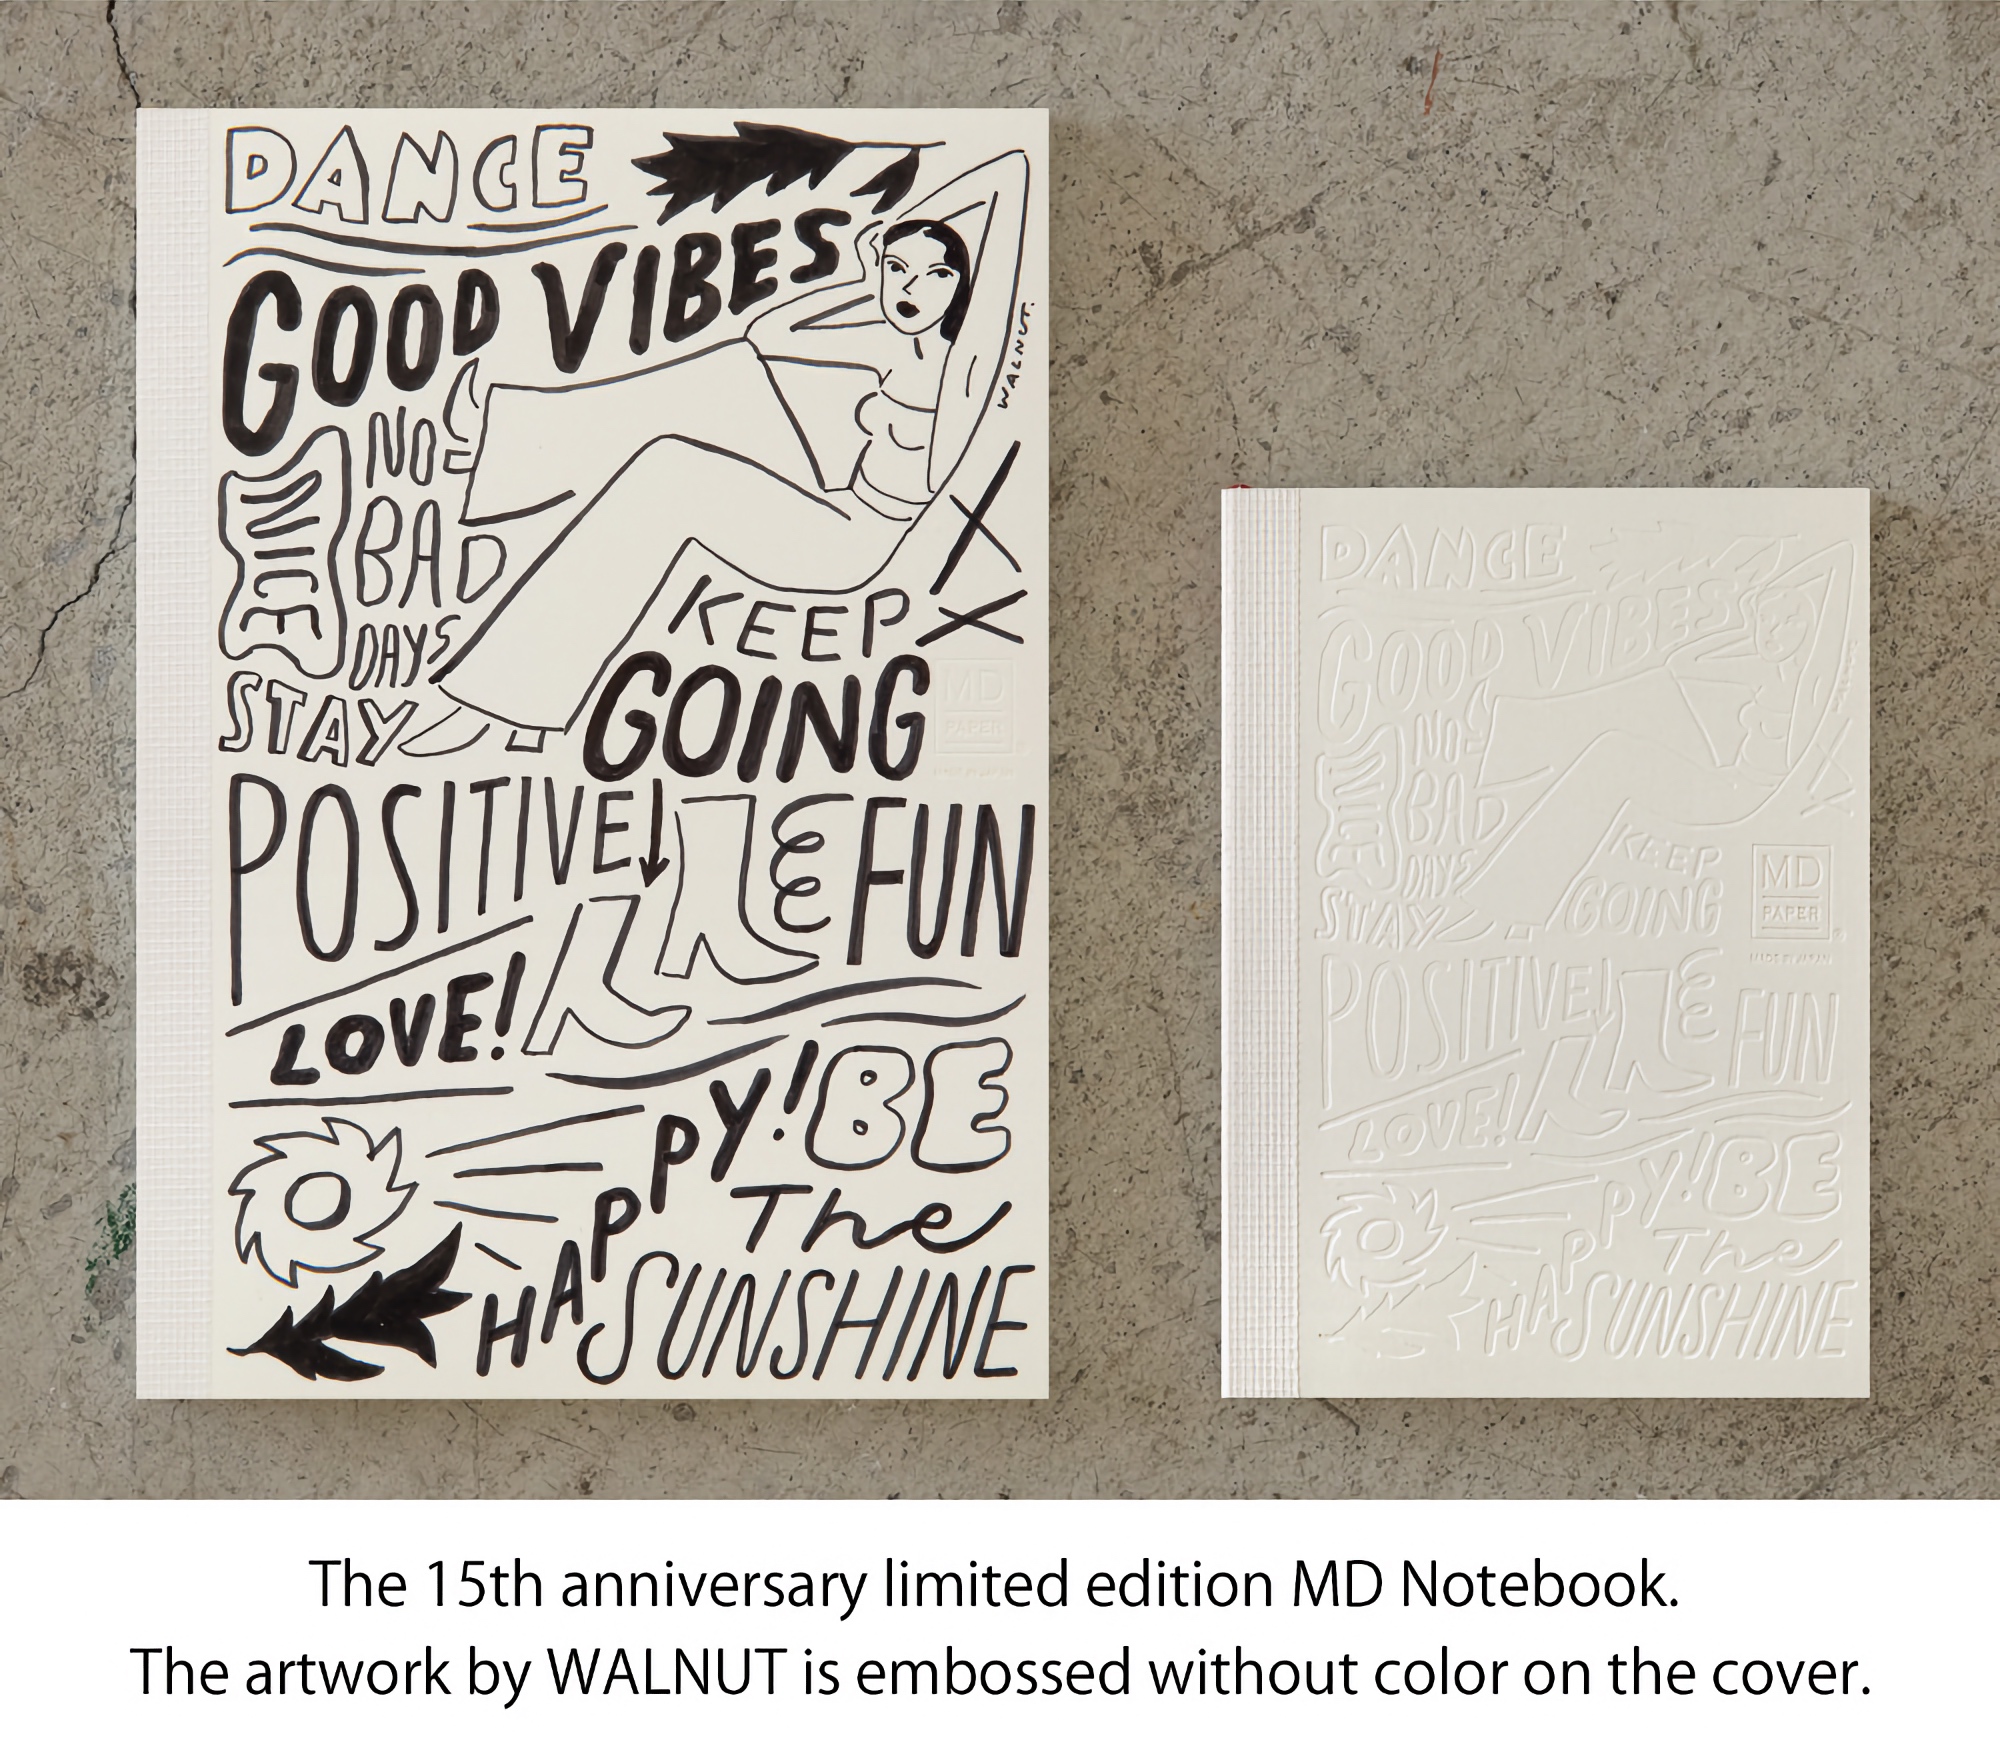 Midori MD Notebook [A6] Blank Artist Collaboration WALNUT 15th Anniversary [Limited Edition]